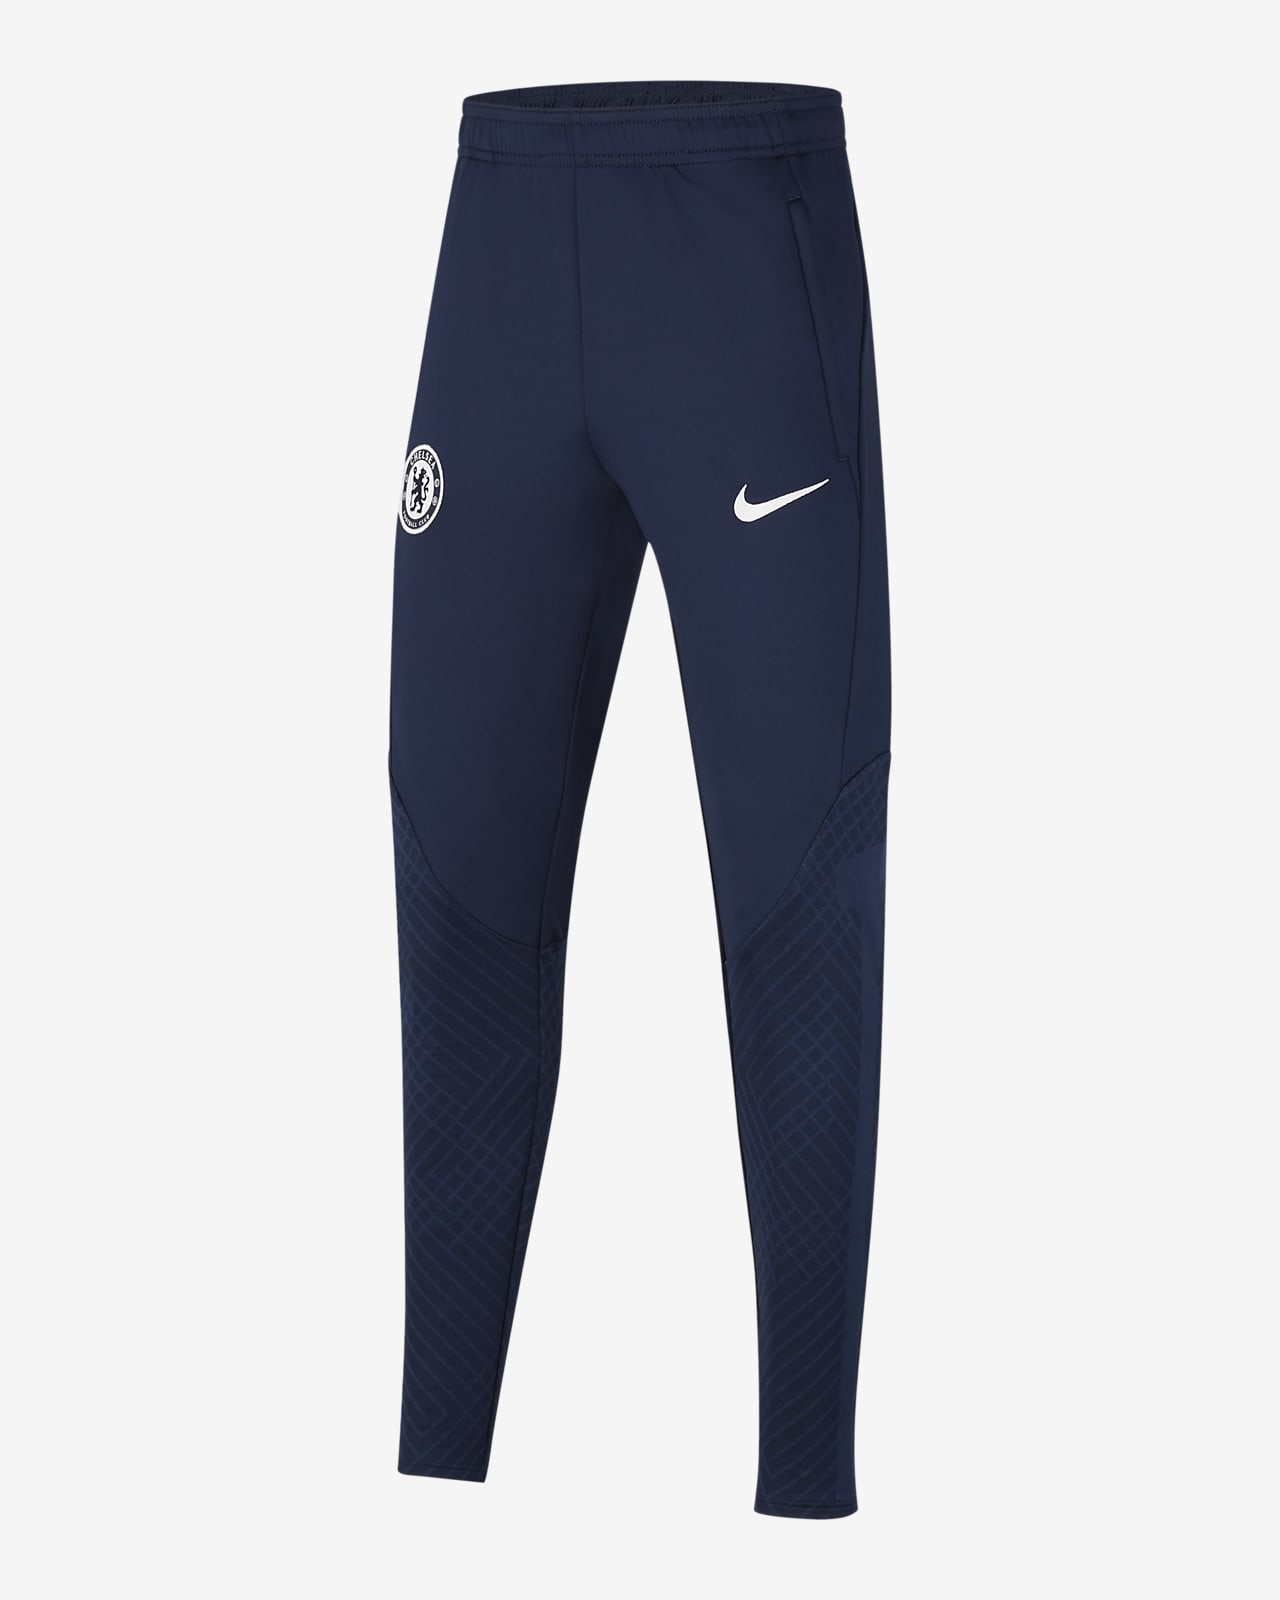 Chelsea F.C. Strike Older Kids' Nike Dri-FIT Football Pants